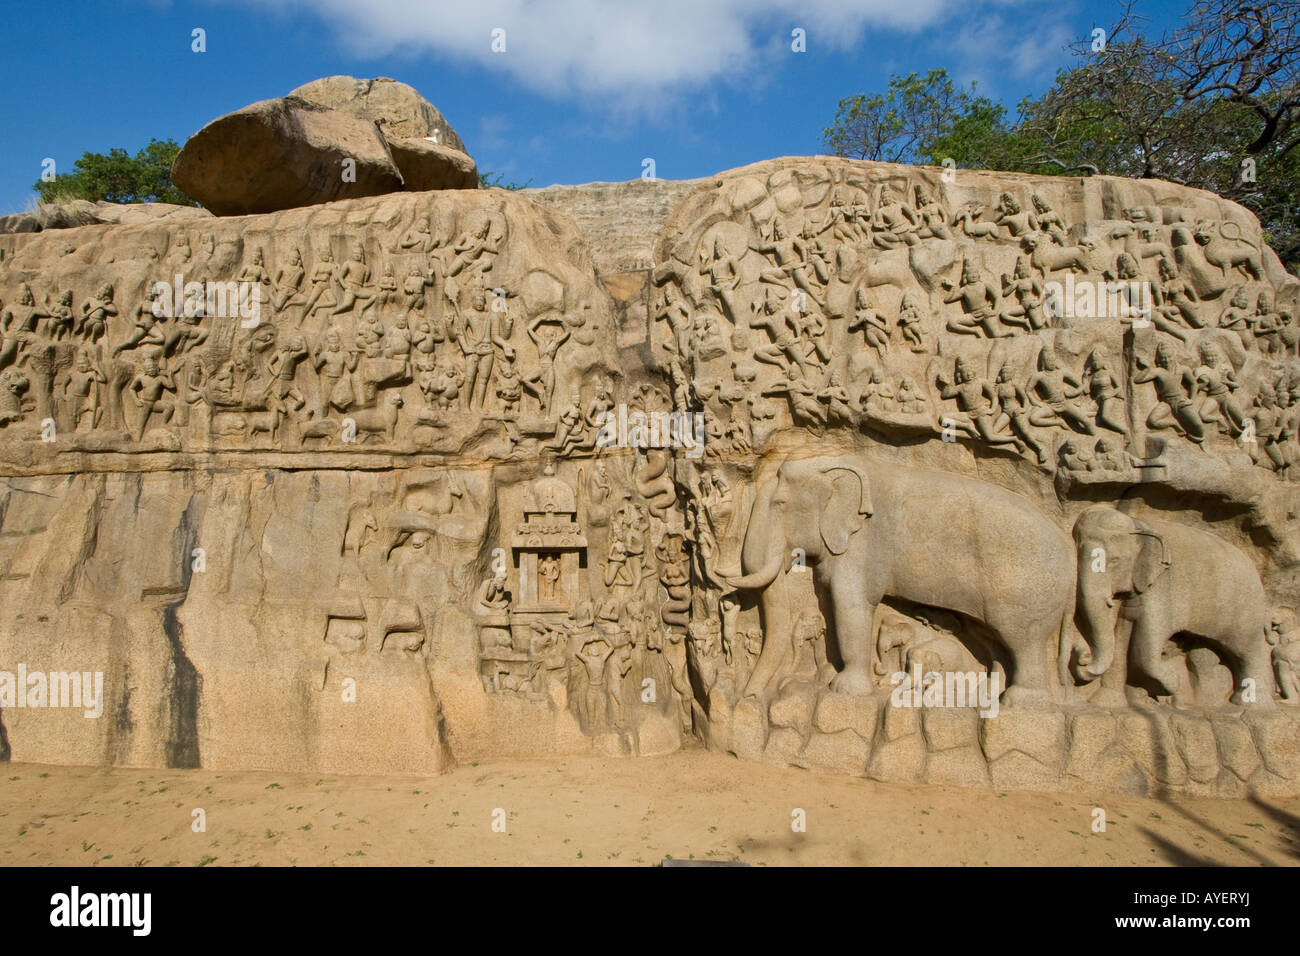 Arjunas Penance Stone Relief Carvings at Mamallapuram South India Stock Photo